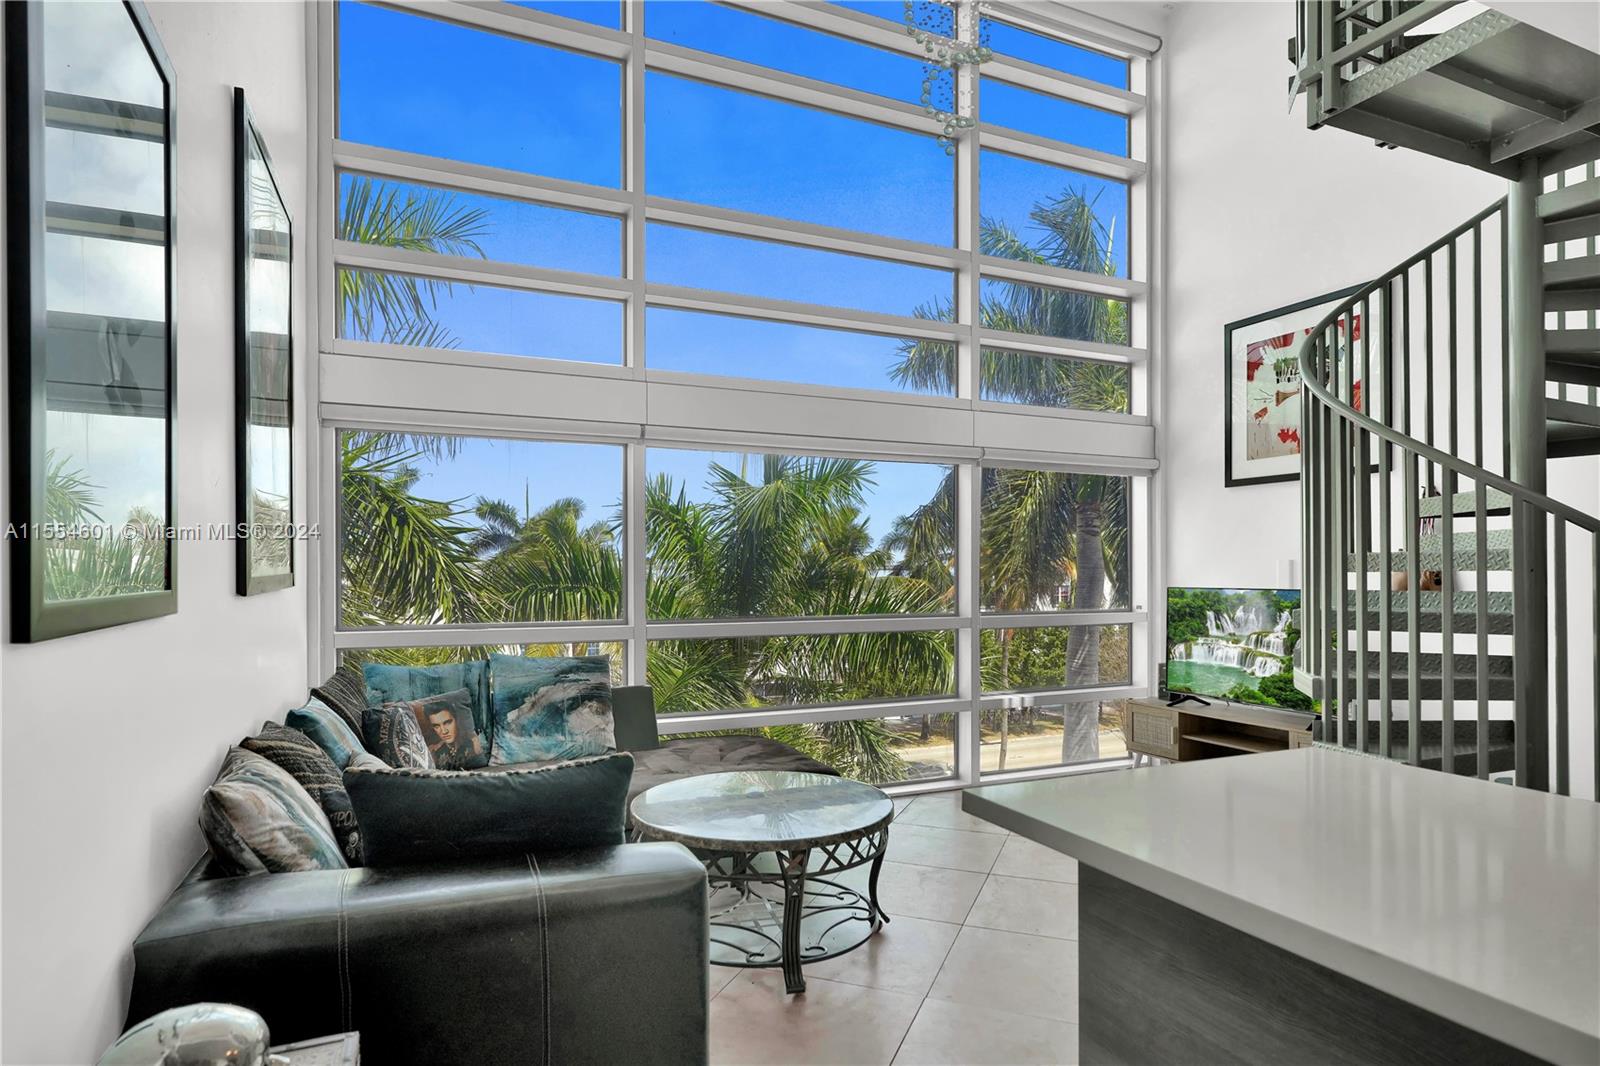 Rental Property at 421 Meridian Ave 16, Miami Beach, Miami-Dade County, Florida - Bedrooms: 2 
Bathrooms: 2  - $4,900 MO.